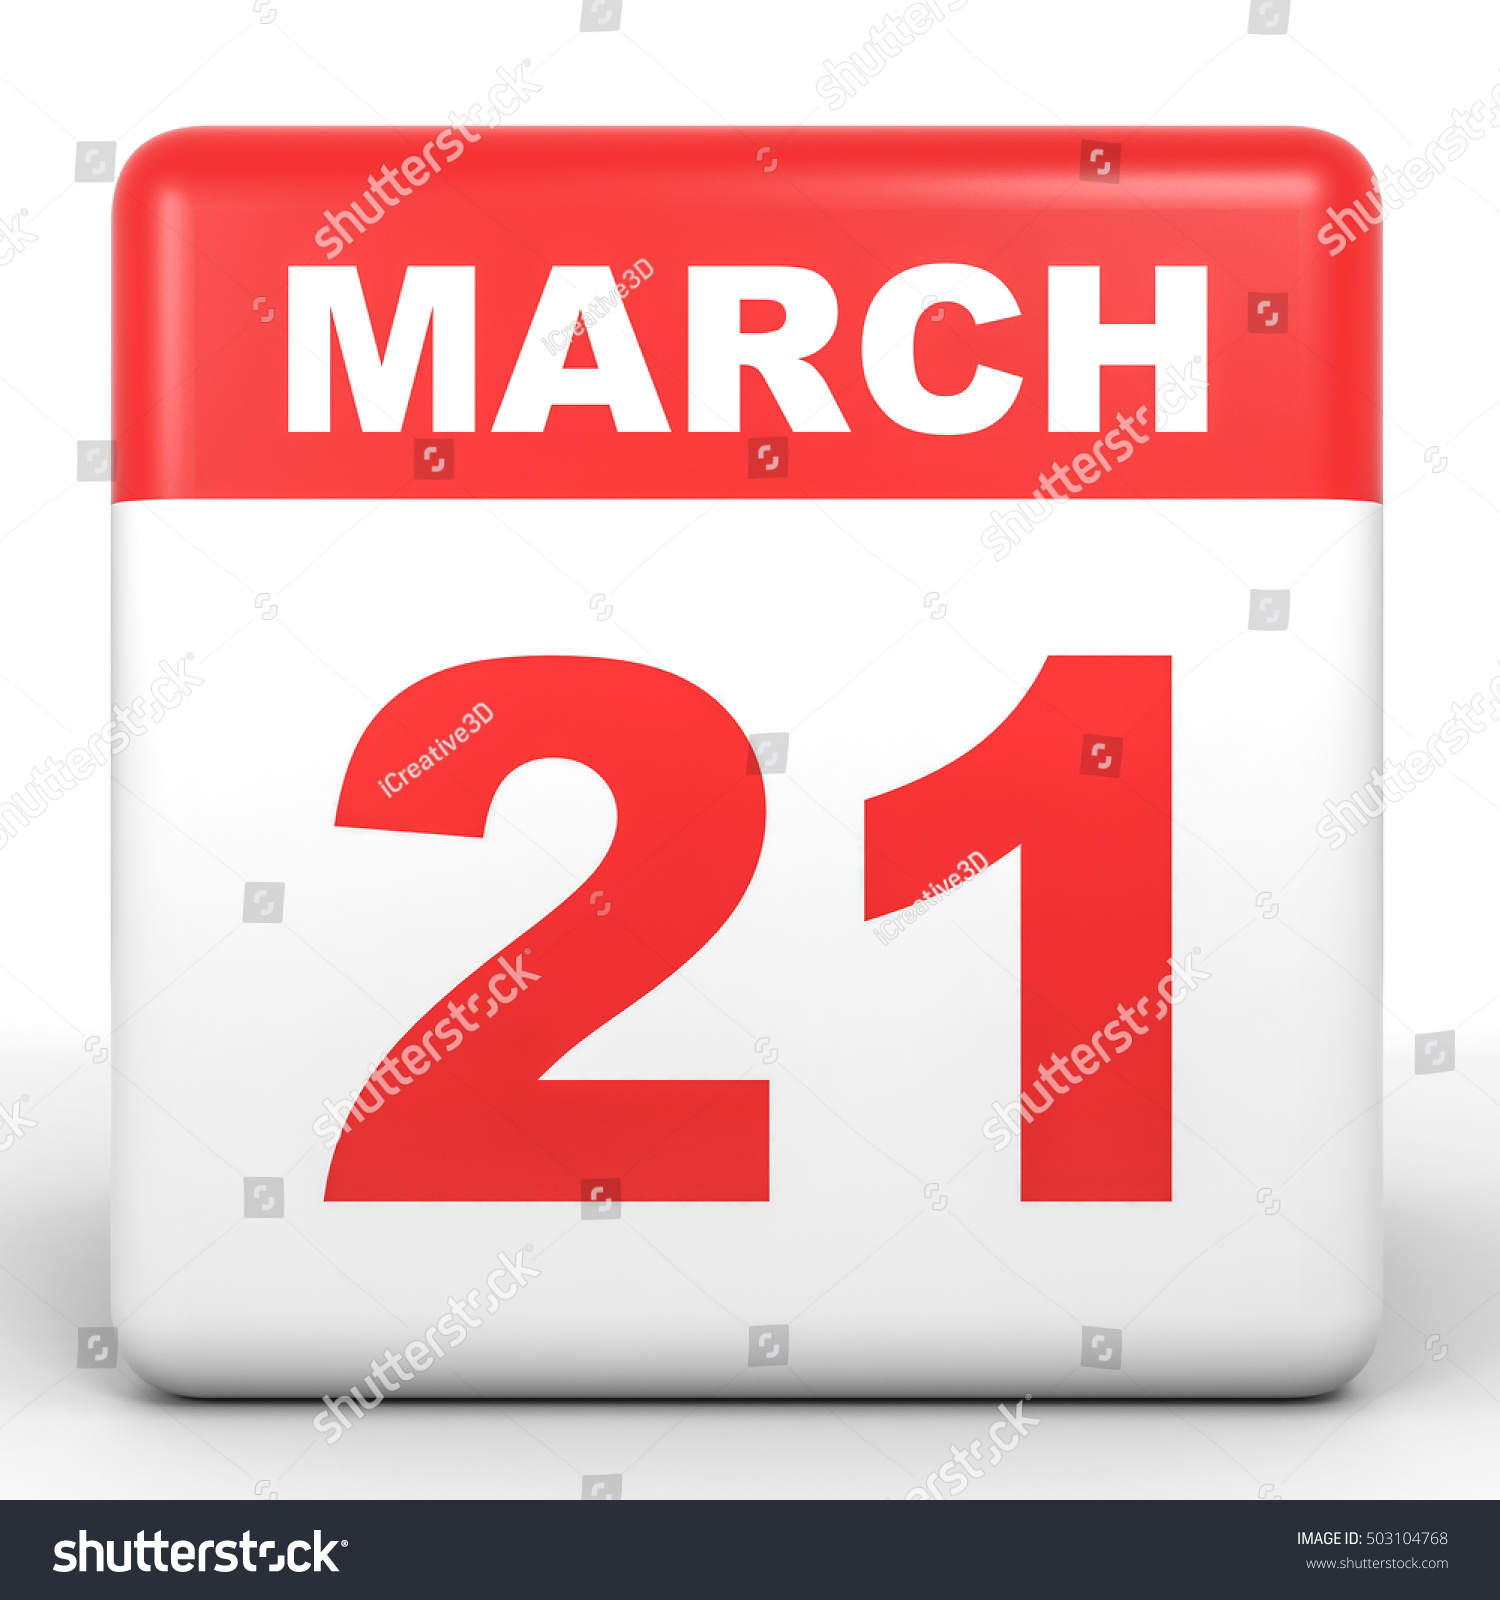 March 21. Calendar On White Background. 3d Illustration. 503104768